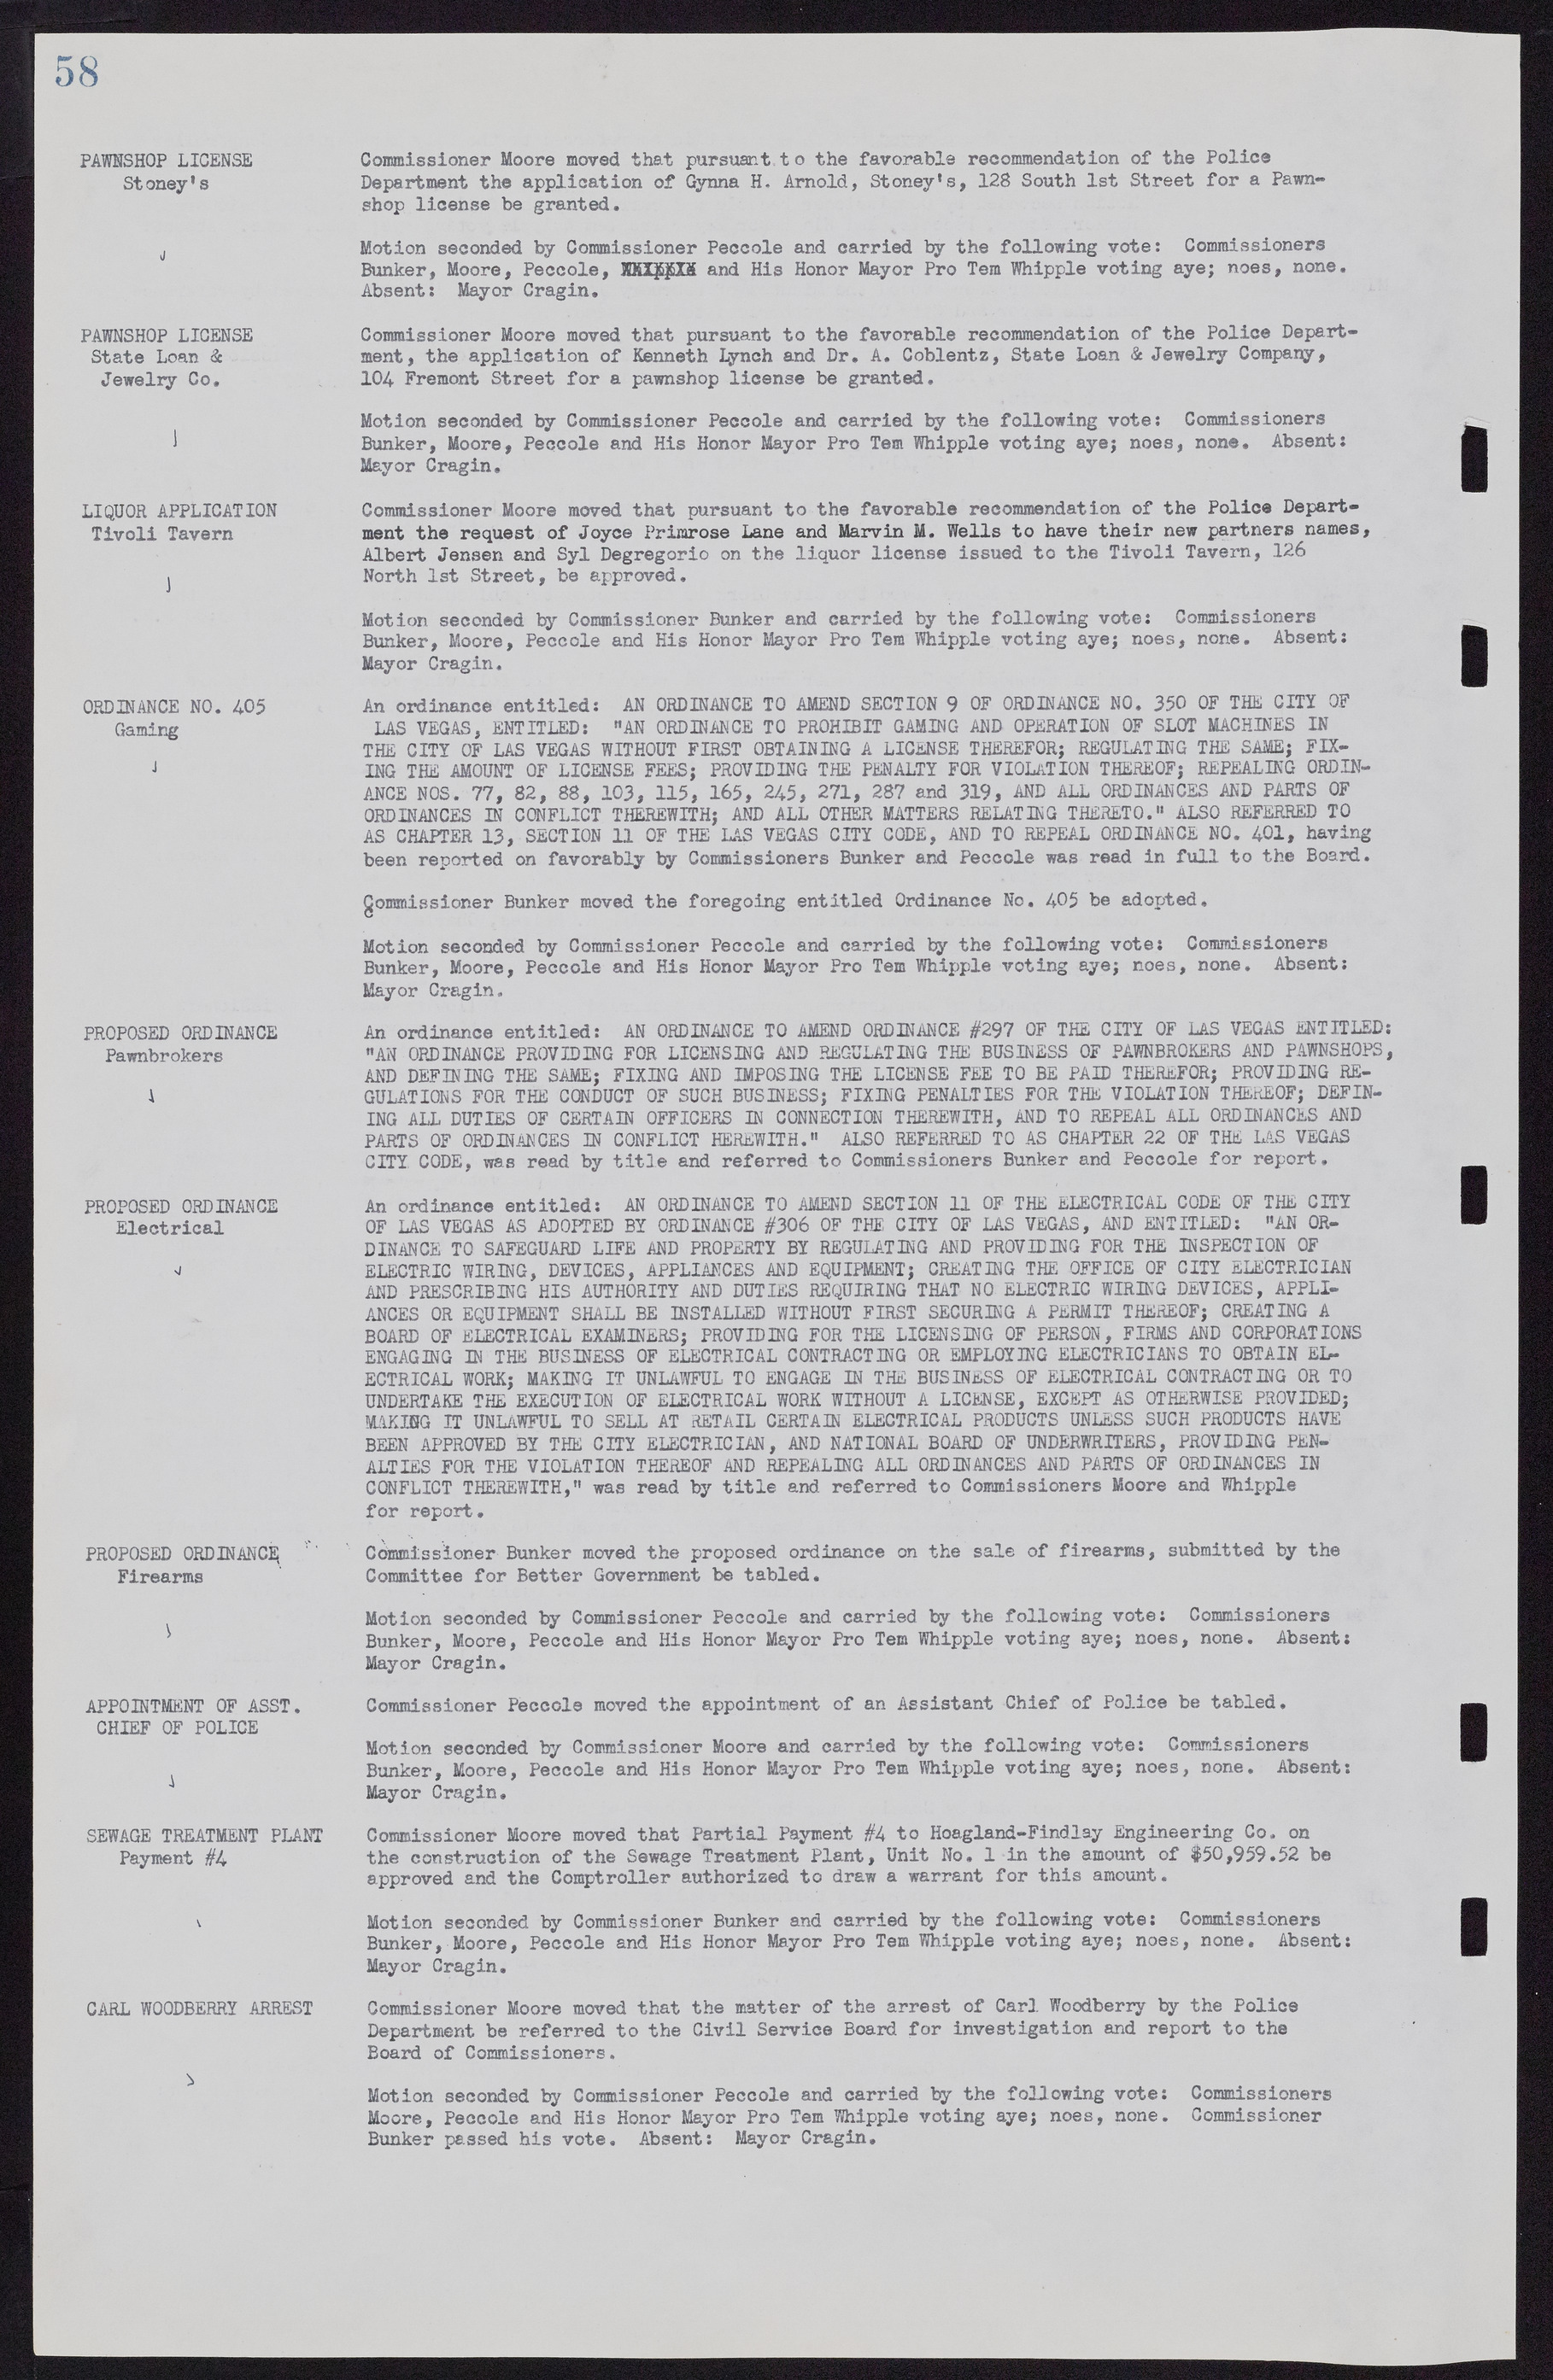 Las Vegas City Commission Minutes, November 7, 1949 to May 21, 1952, lvc000007-66